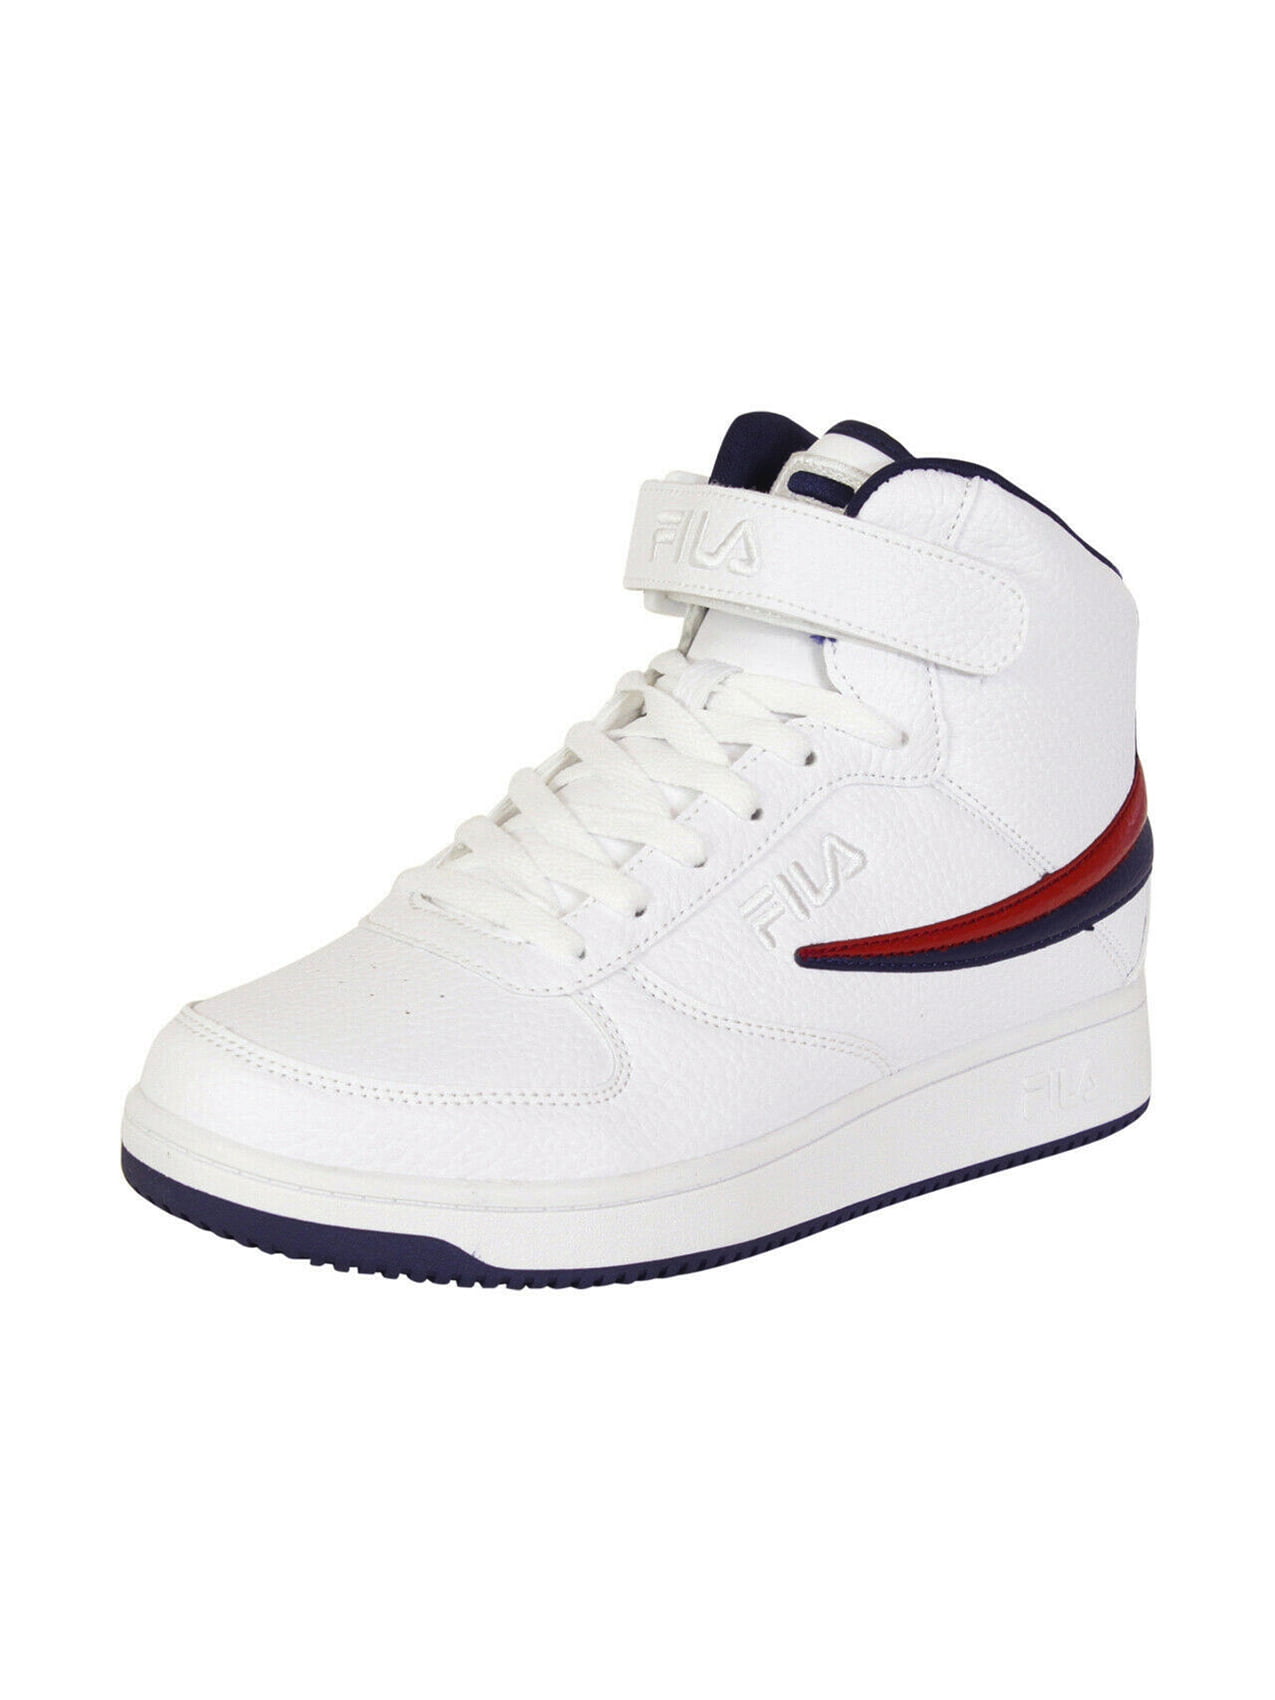 censur antyder Øde Fila Mens A-High Leather Sneakers Hi Top Shoes White - Walmart.com